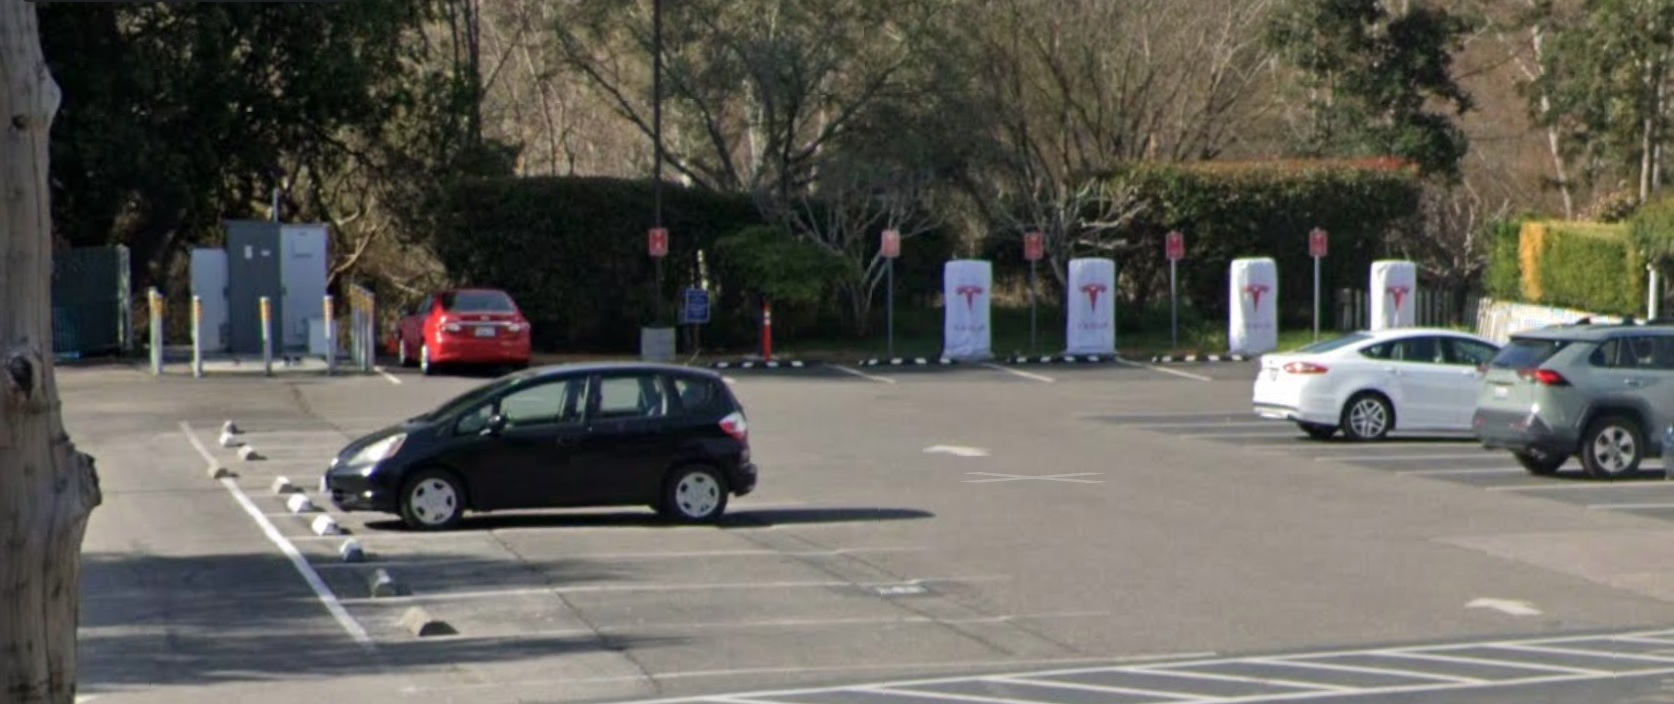 2023 03 19 - Tesla Supercharger - Olema, CA  - Google Street View 2.jpg